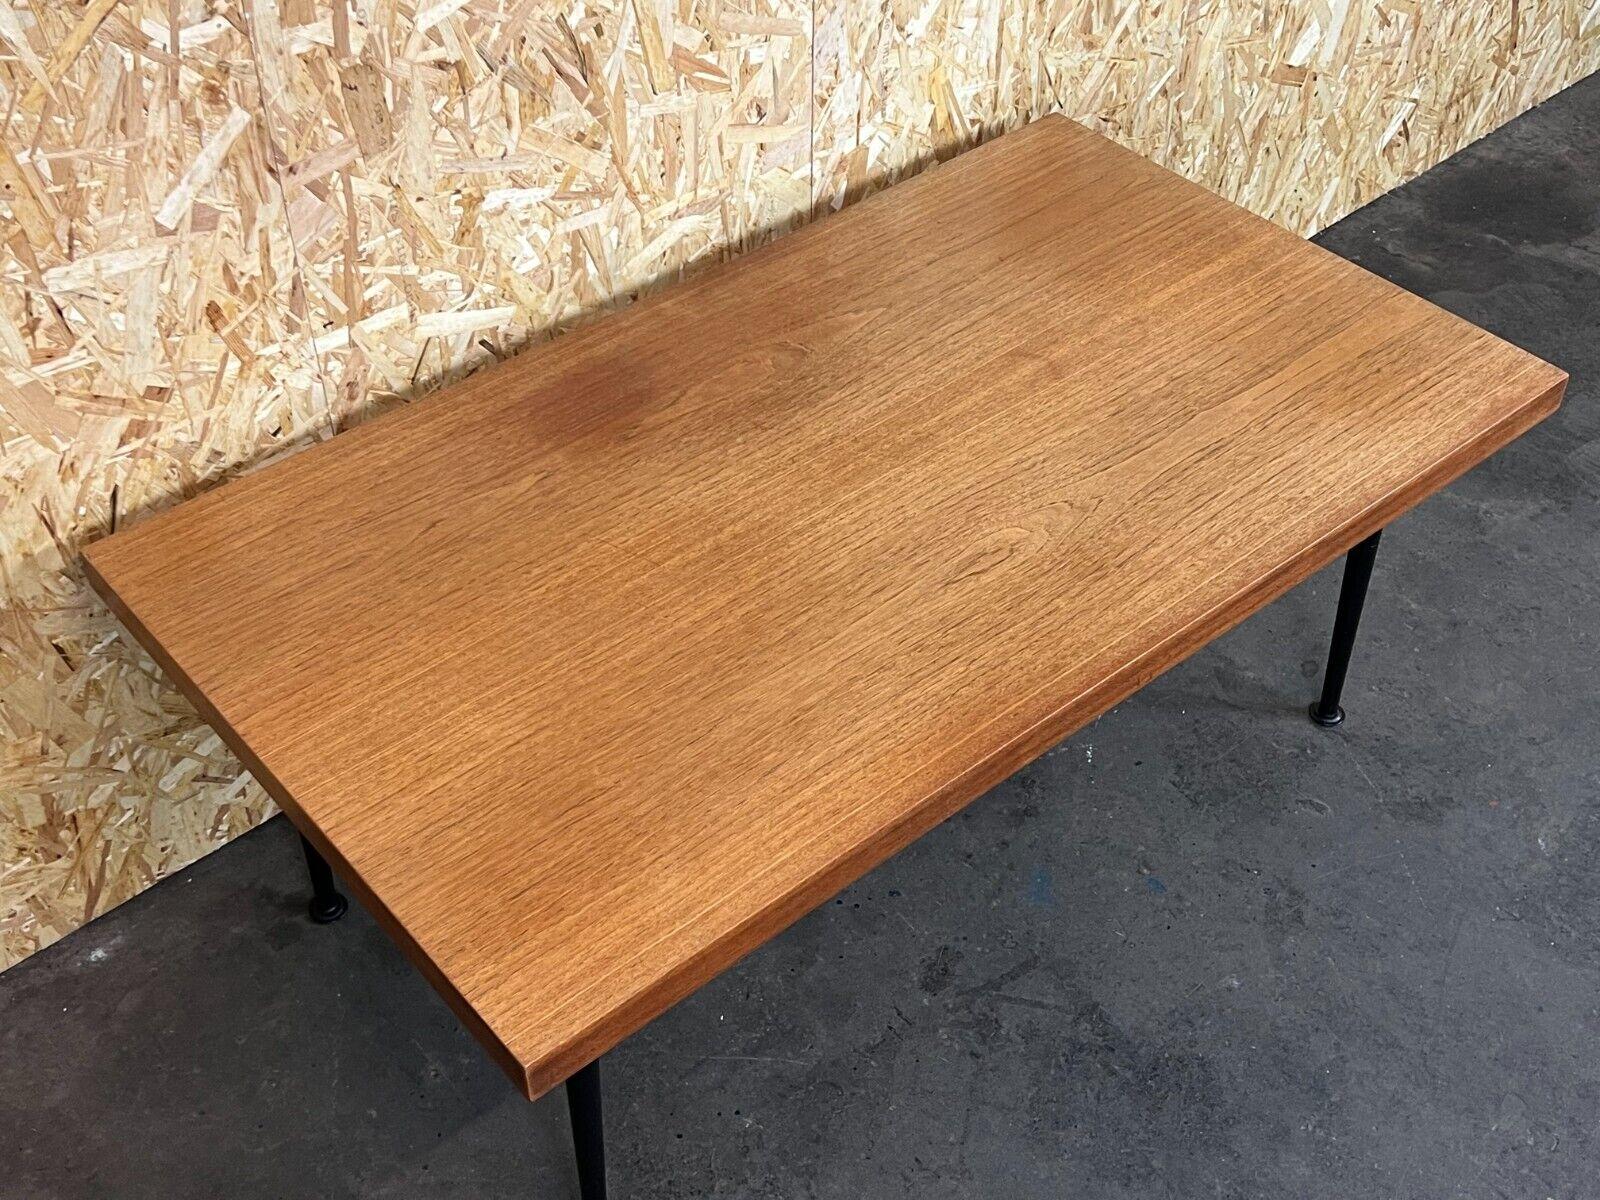 1960s-1970s Teak Coffee Table Side Table Ilse Möbel Danish Modern Design For Sale 3